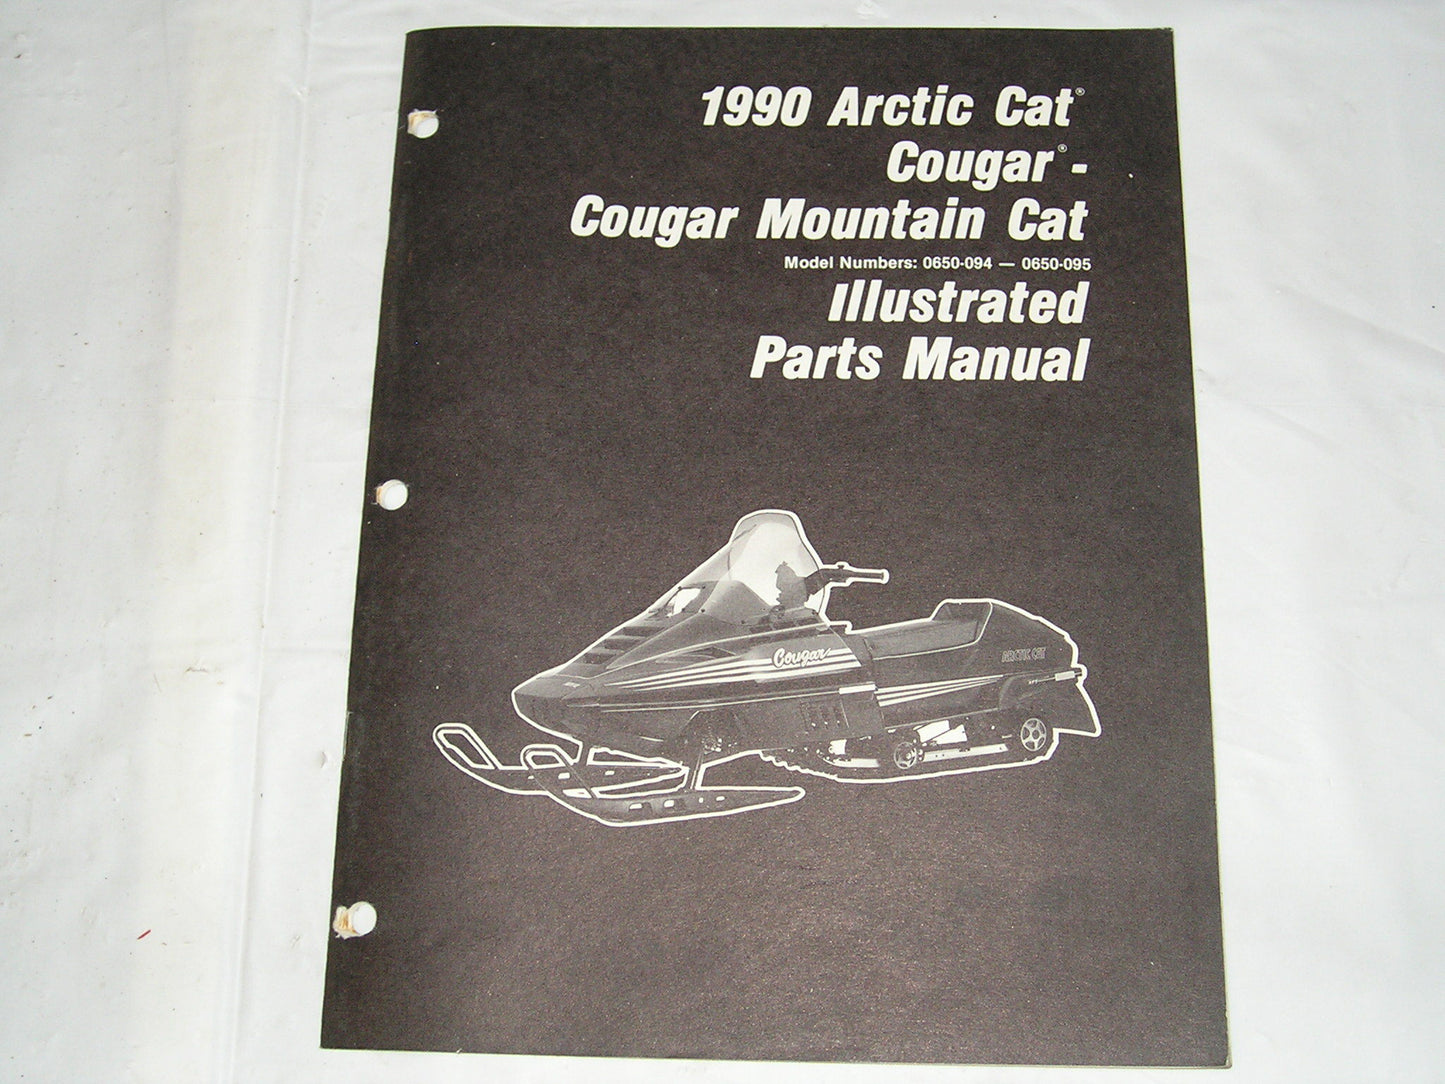 ARCTIC CAT Snowmobile Cougar & Cougar Mountain Cat 1990 Parts Manual 0650-095 #S36